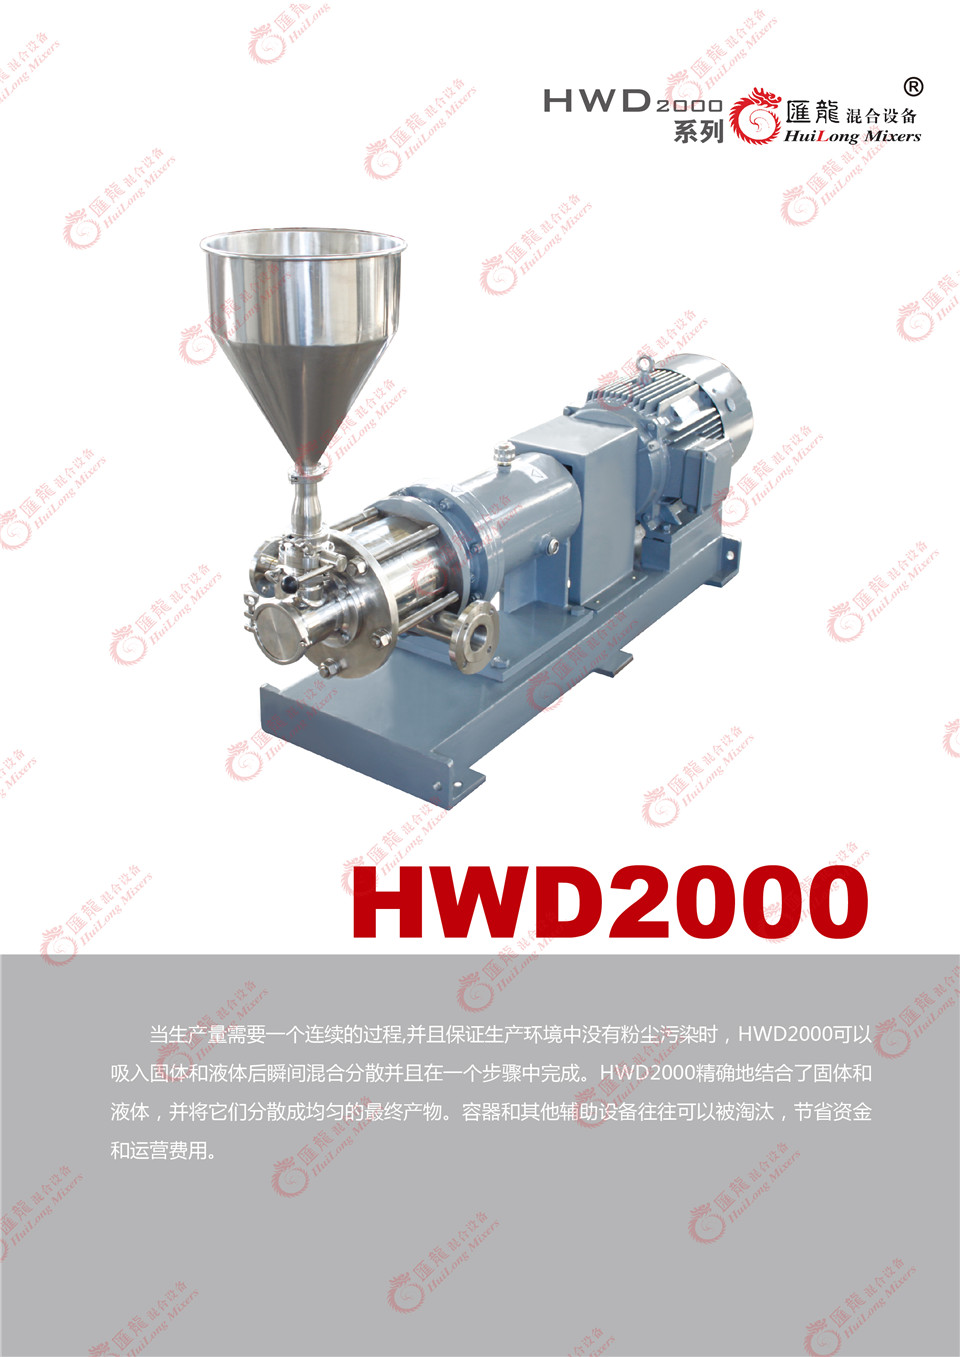 “HWD2000-普通型乳化机”/